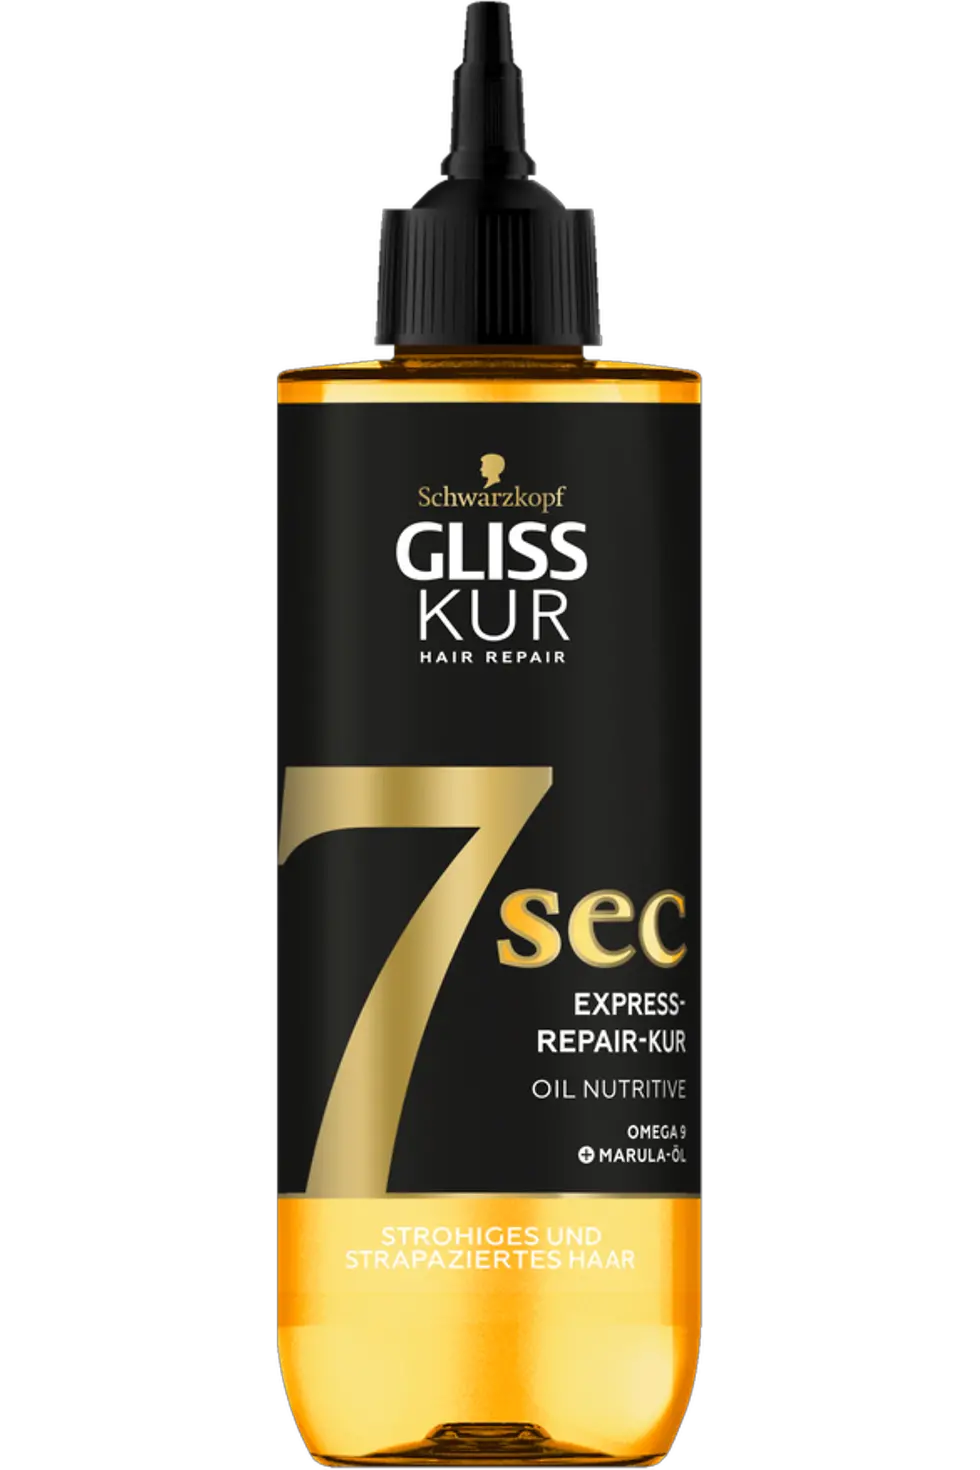 
Gliss 7 Sec Express-Repair-Kur Oil Nutritive